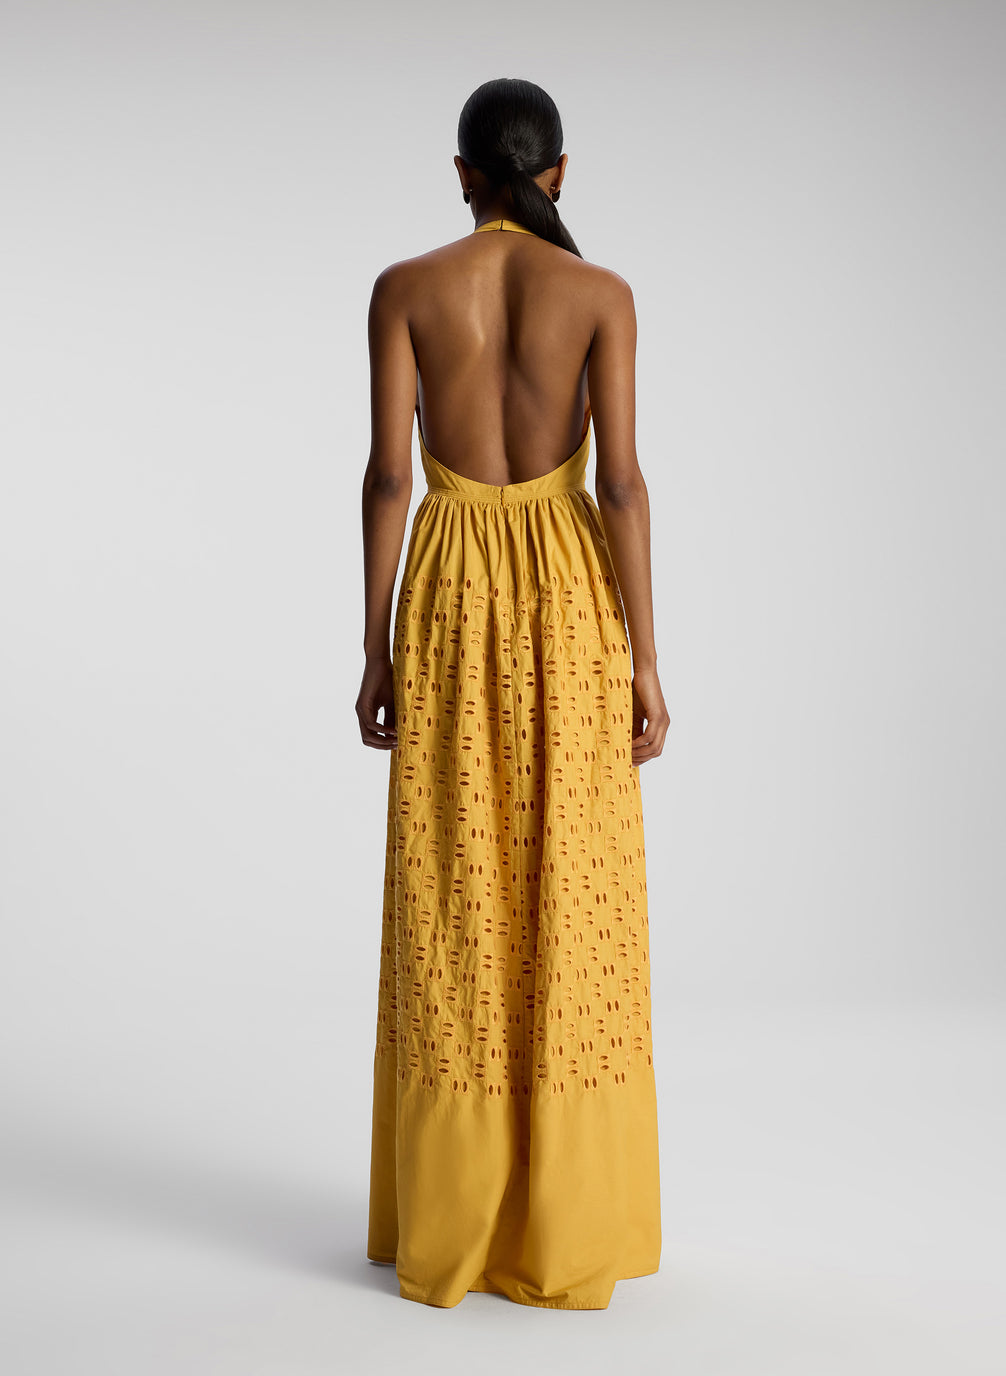 back view of woman wearing yellow maxi dress